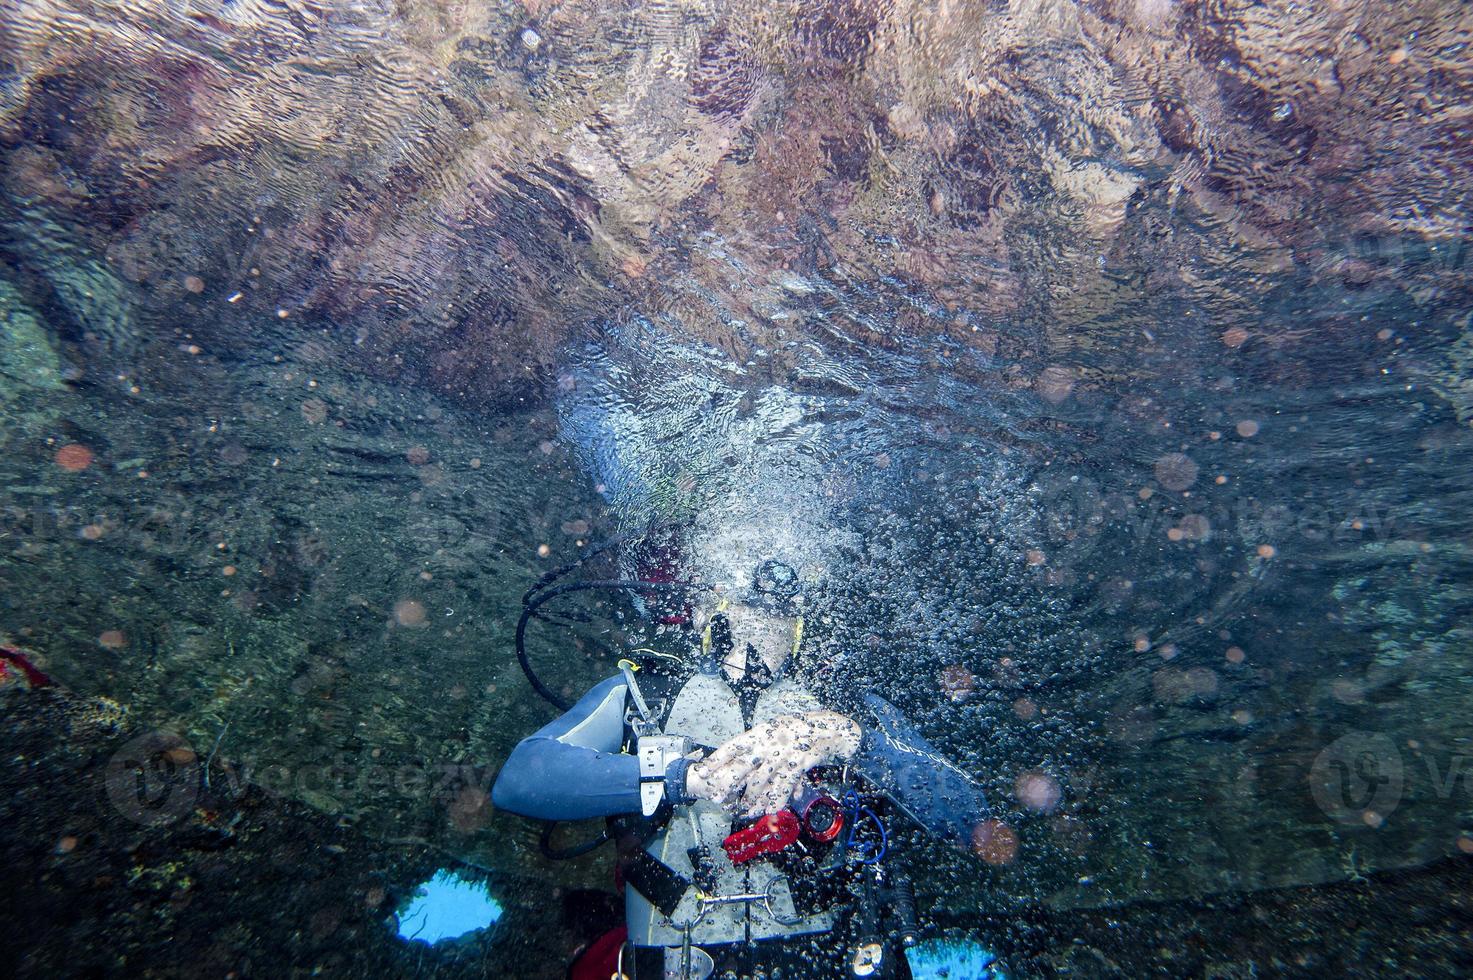 precontinente jacques cousteau casa submarina foto